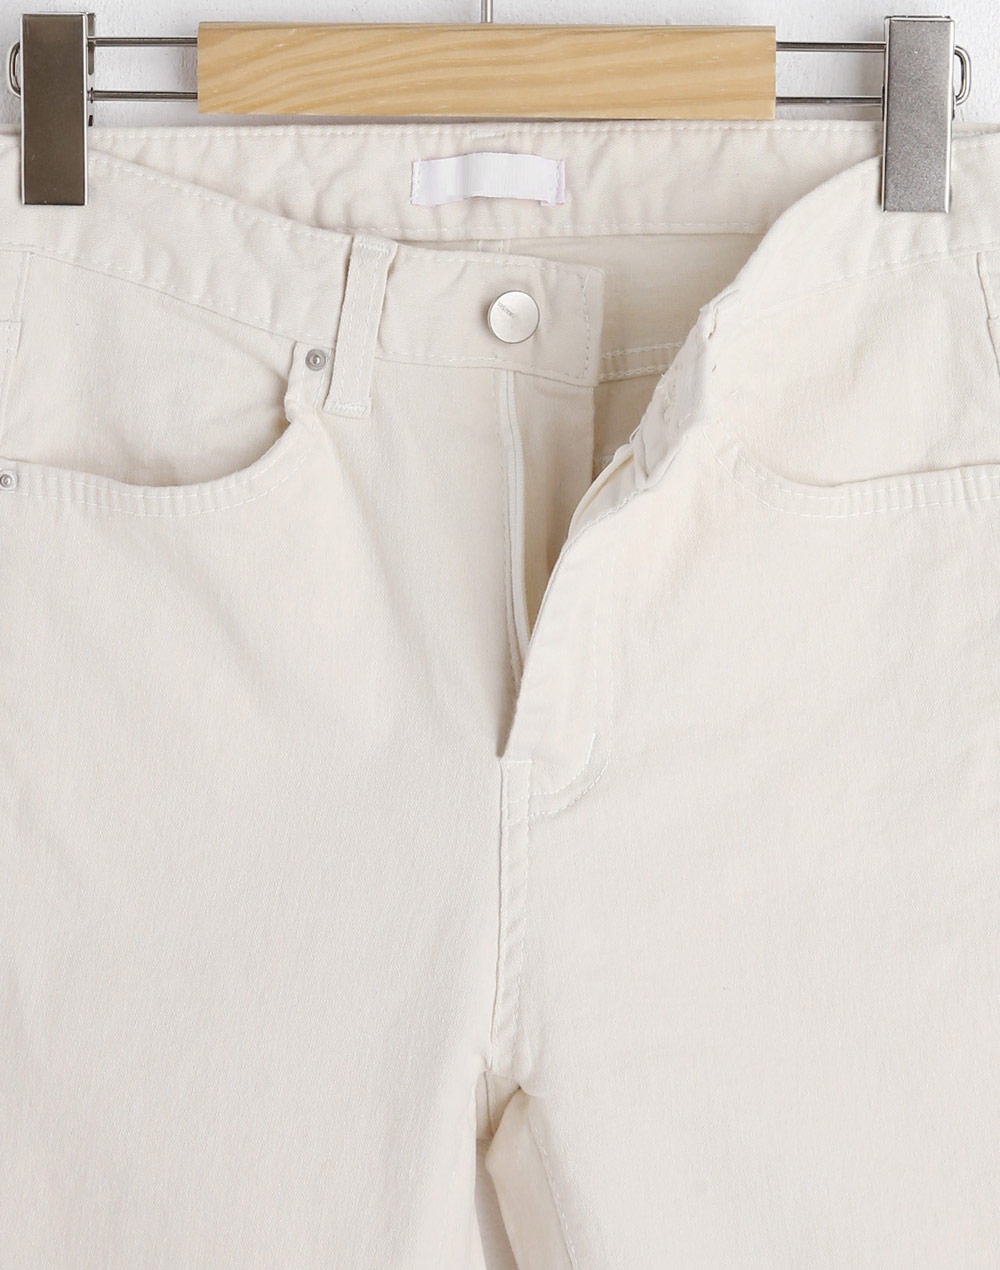 skinny pants・t279586（パンツ/パンツ）| 1016_kanako | 東京ガールズマーケット